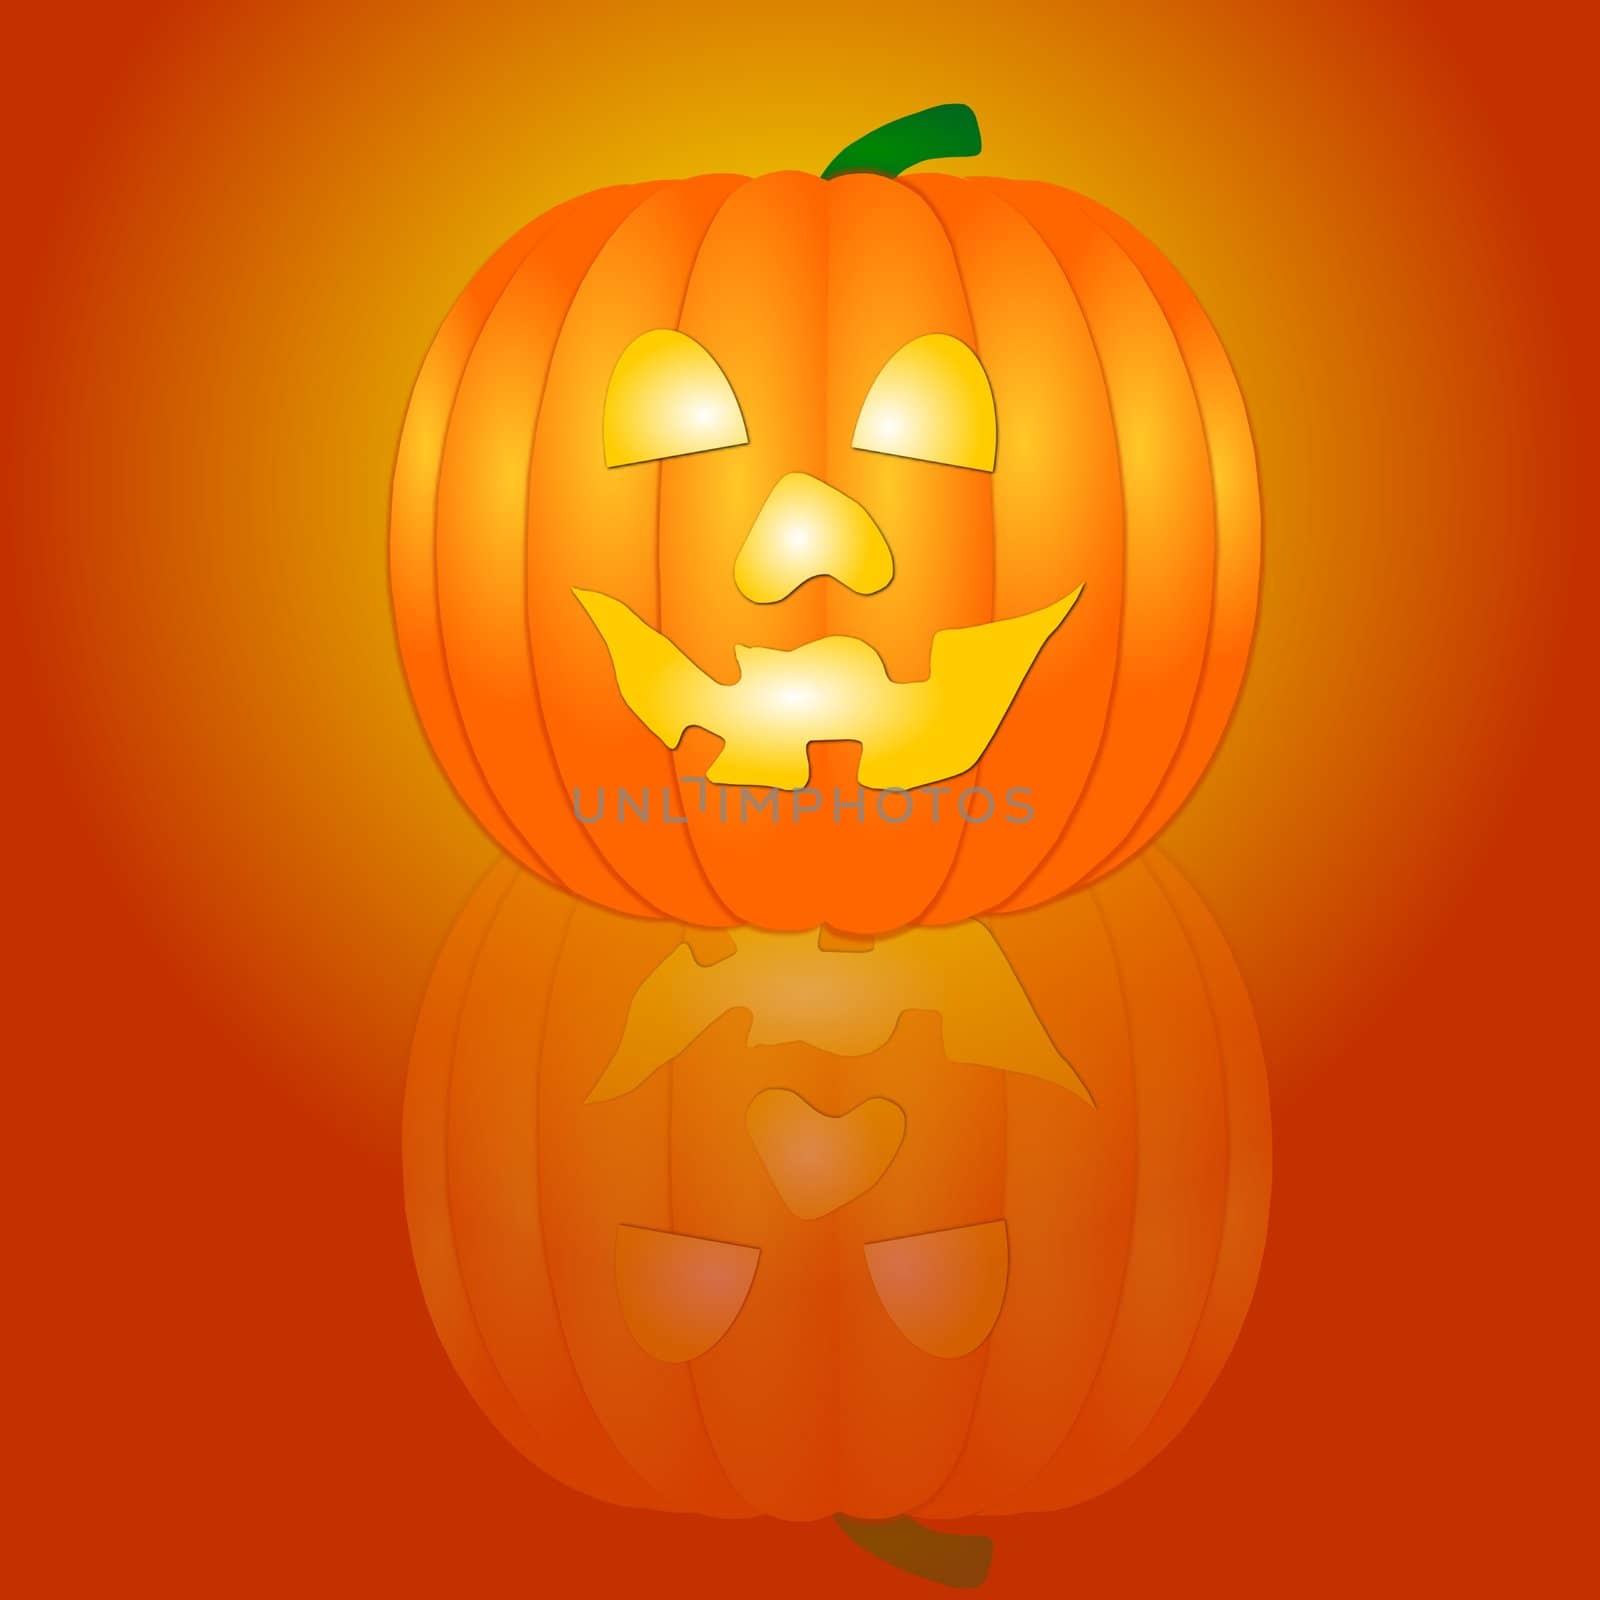  Halloween Pumpkin by peromarketing